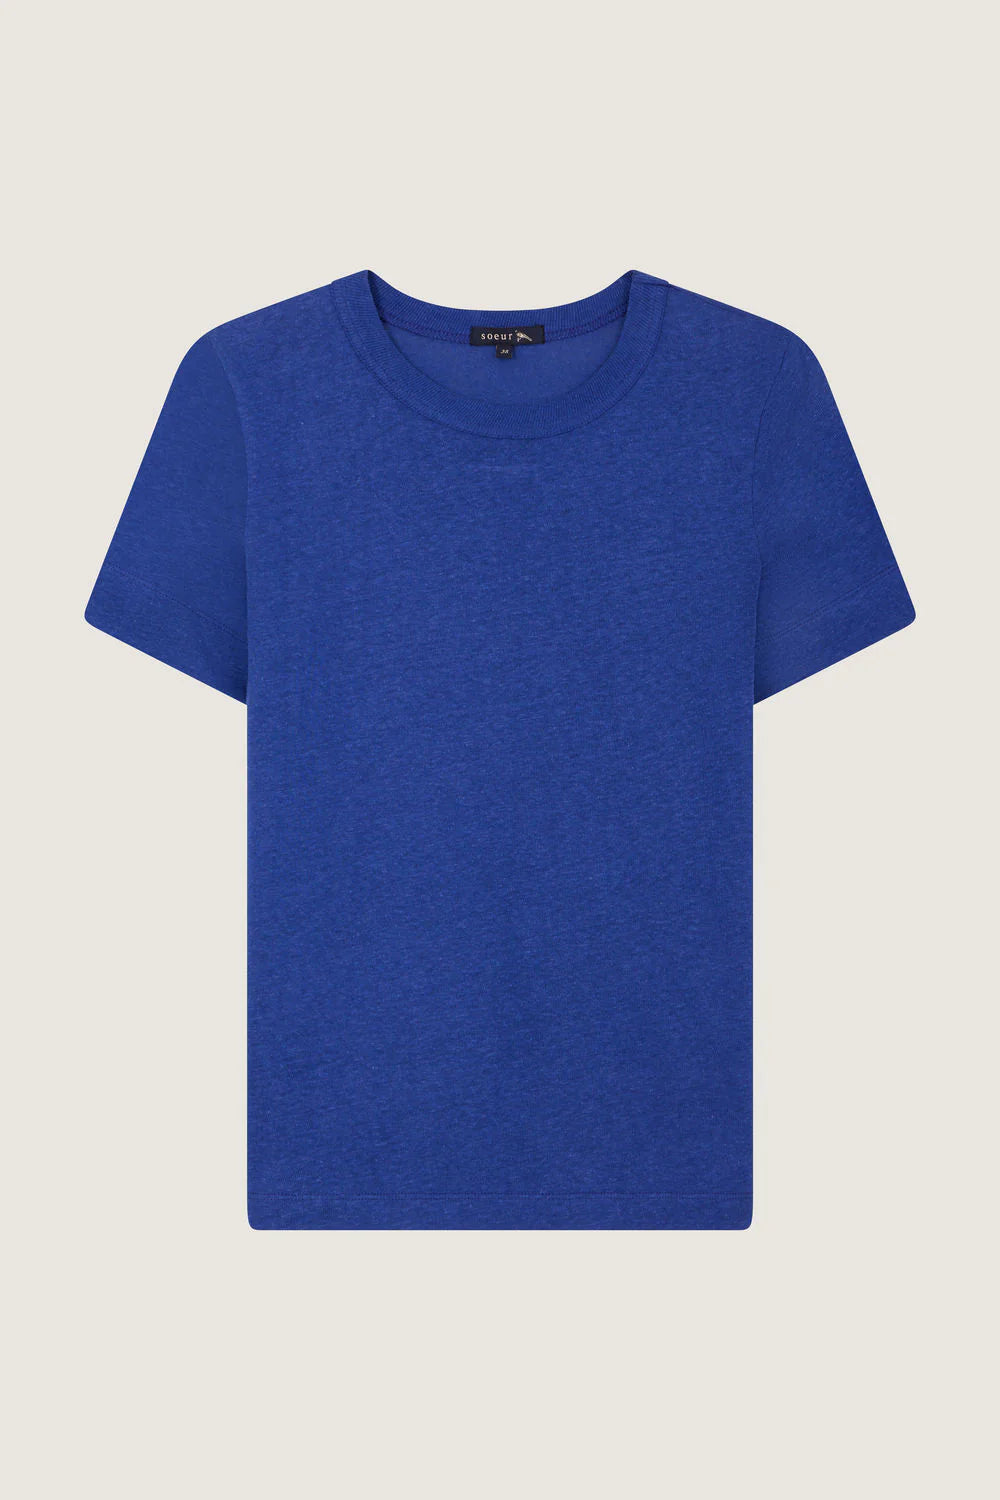 Blue Cyril t-shirt - Sister